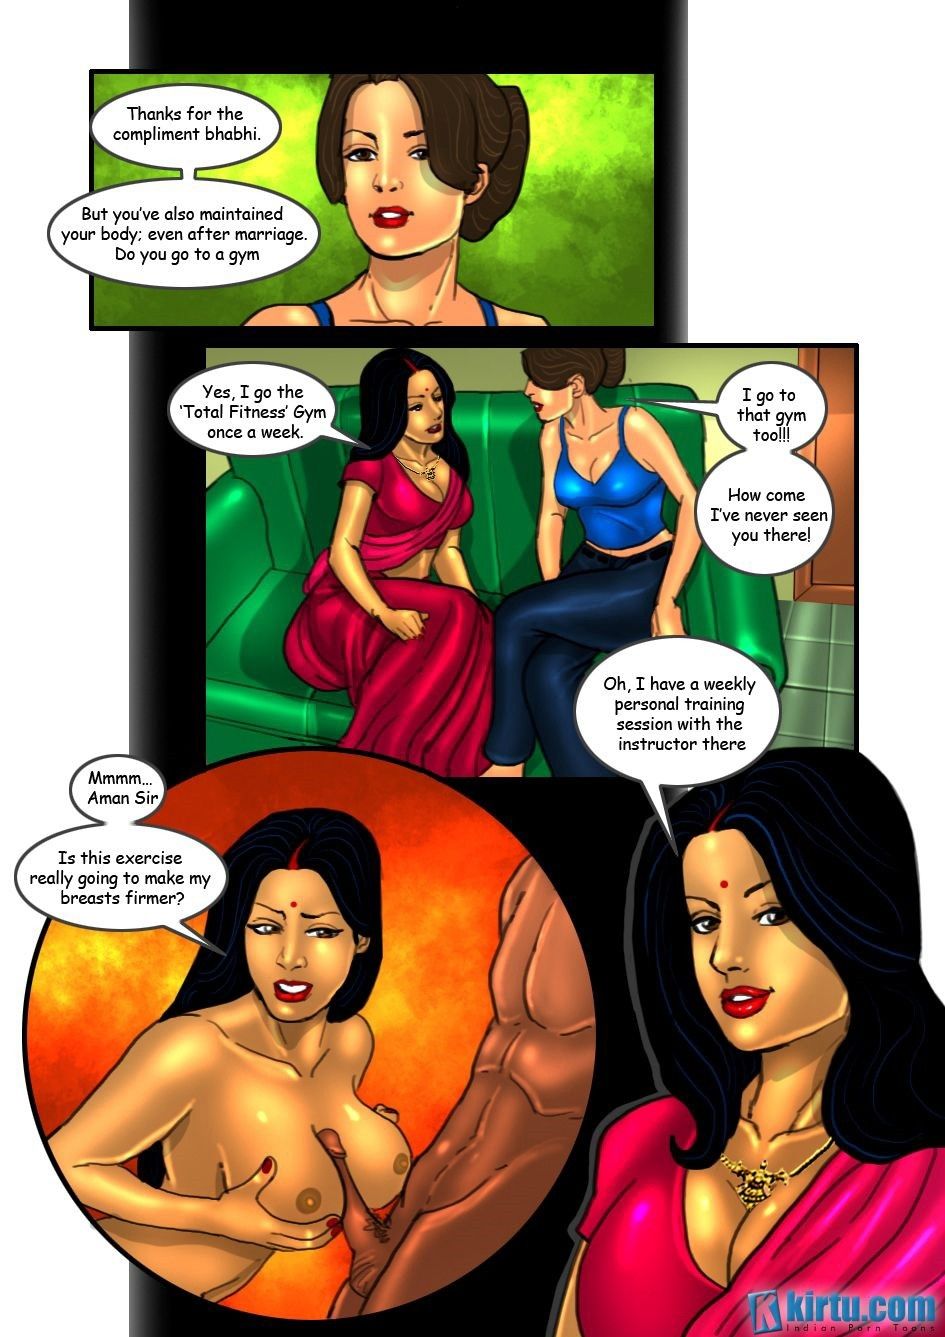 [Kirtu] Savita Bhabhi 20 - Sexercise page 3